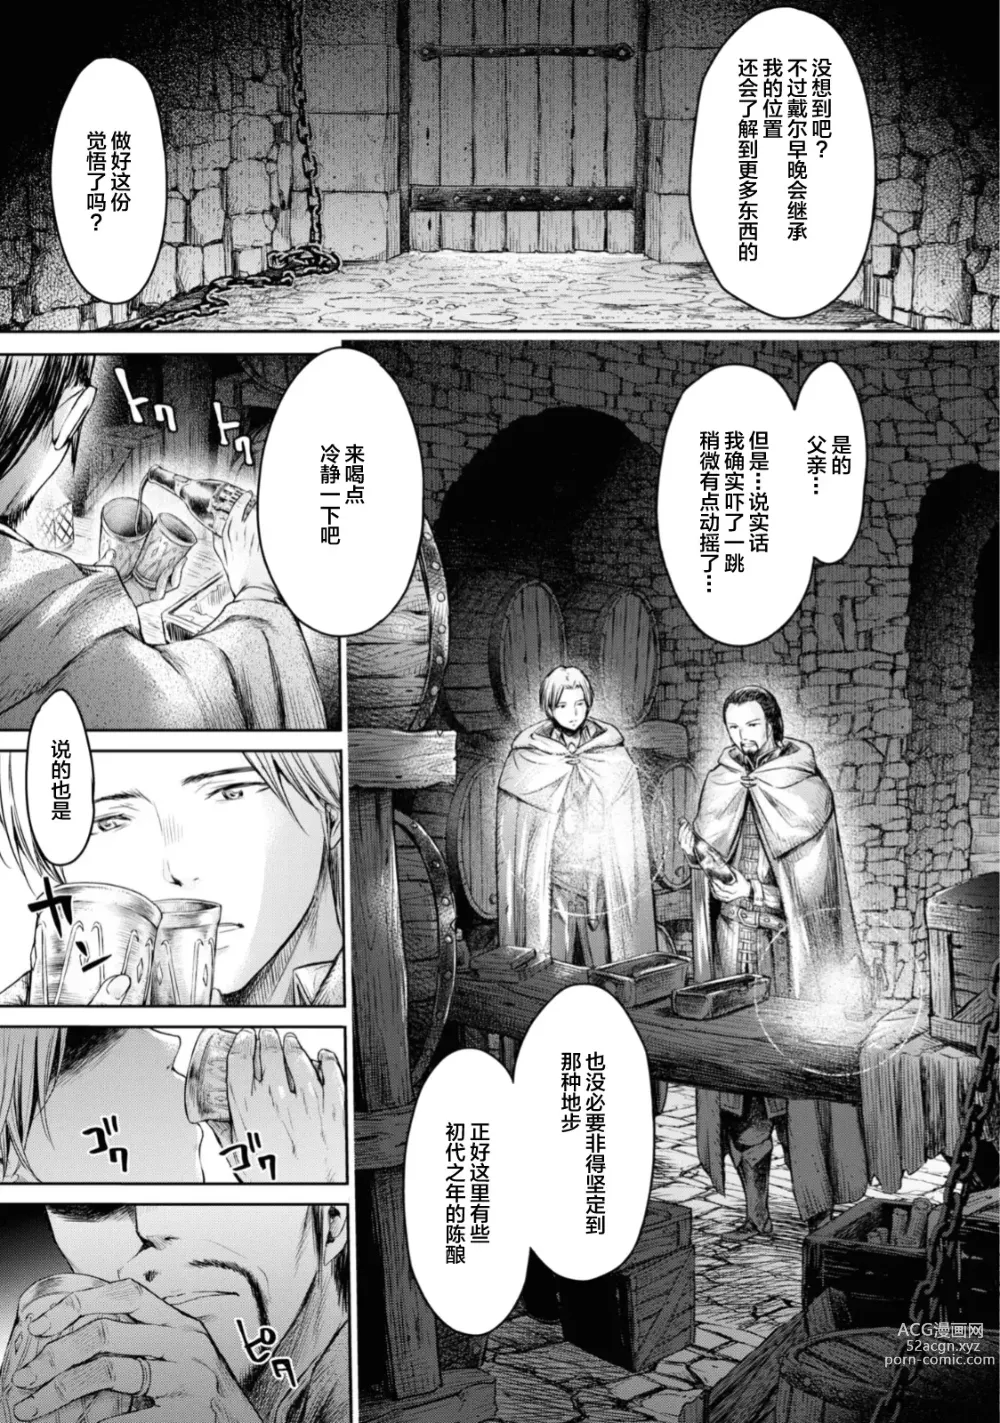 Page 4 of manga Nageki no Alicia - Sorrow of Alicia Bunsatsuban: 4